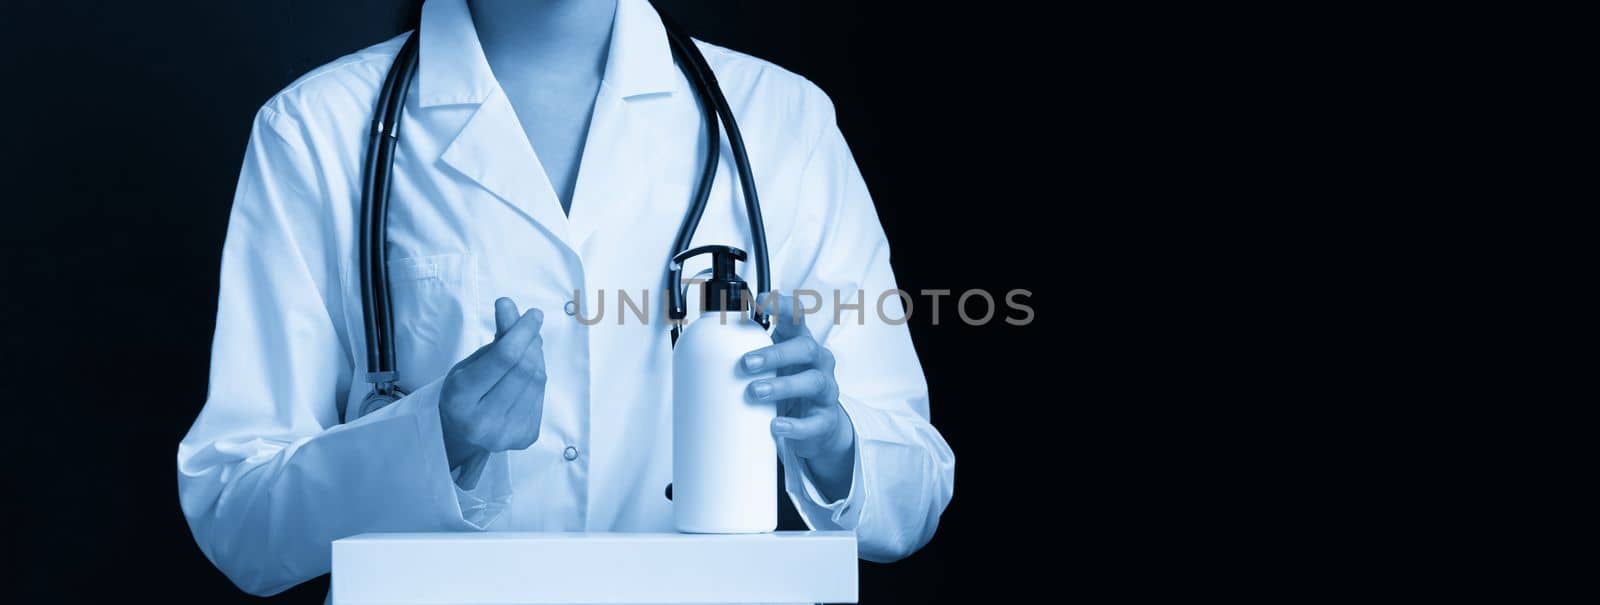 doctor applying antibacterial spray on hand on black background by Mariakray